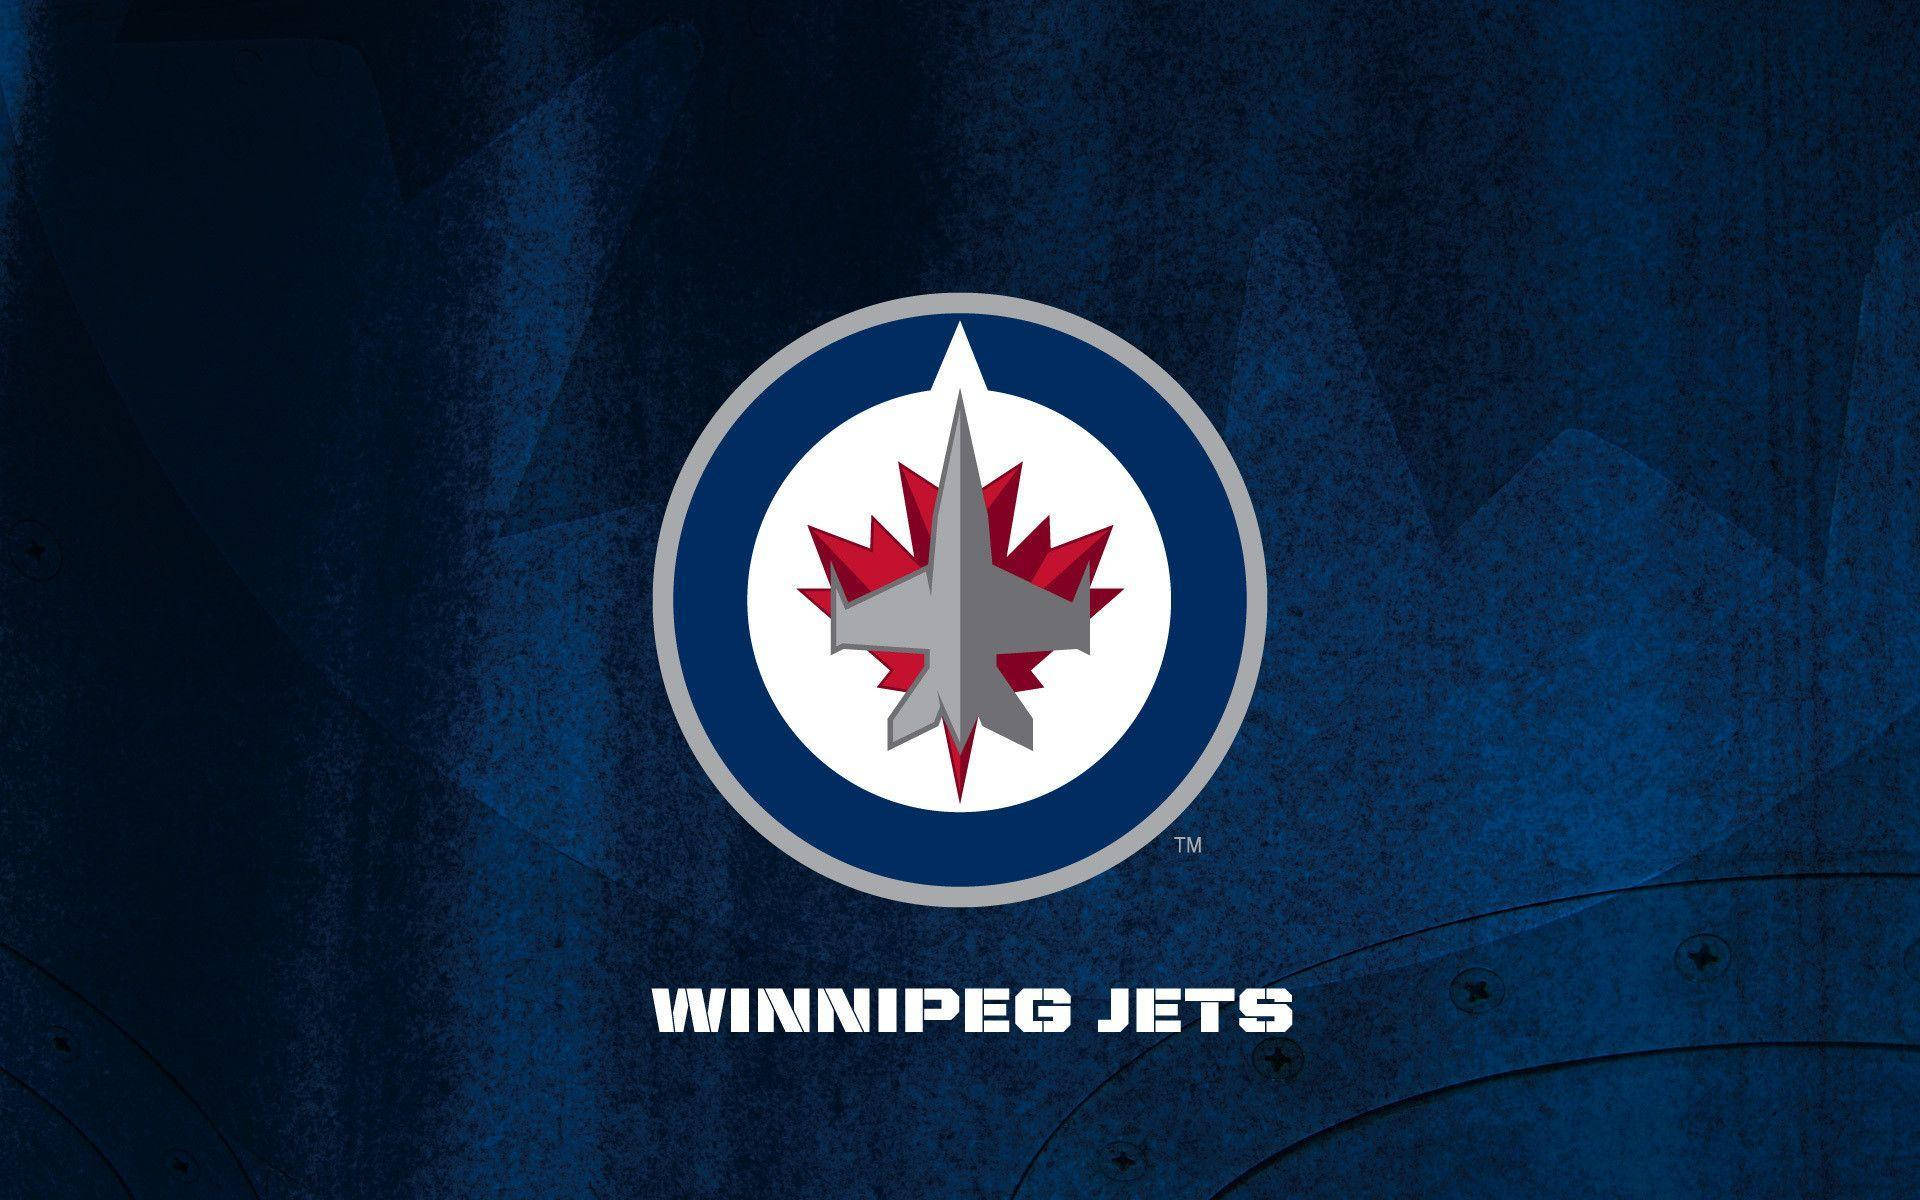 Winnipeg Jets Hockey Team Logo Background